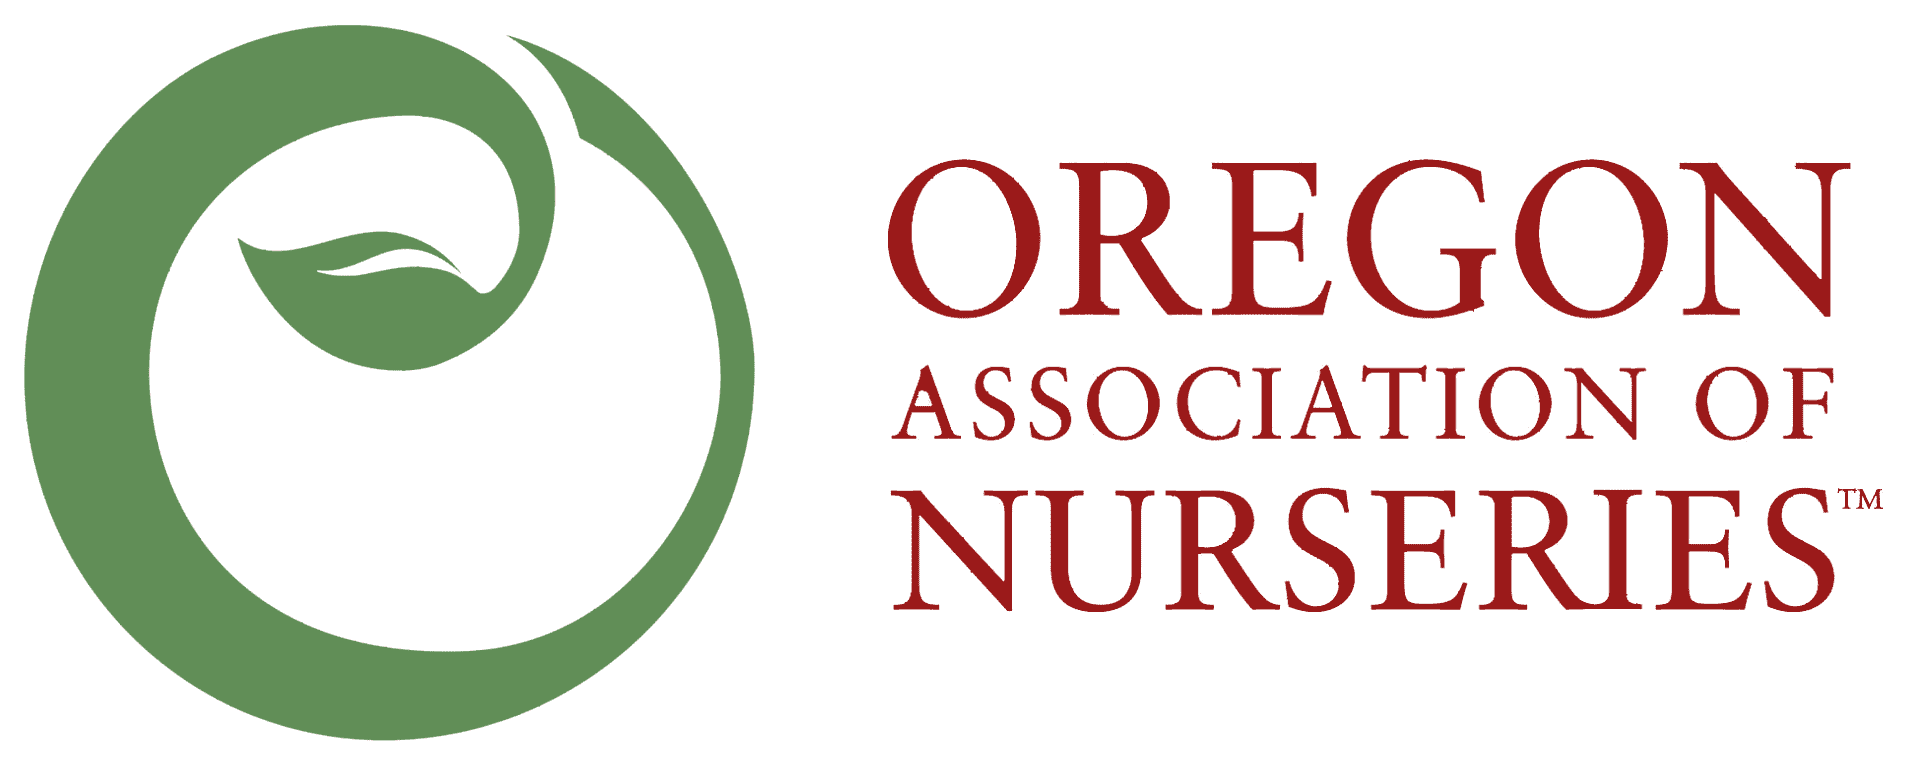 Oregon associations of Nurseries